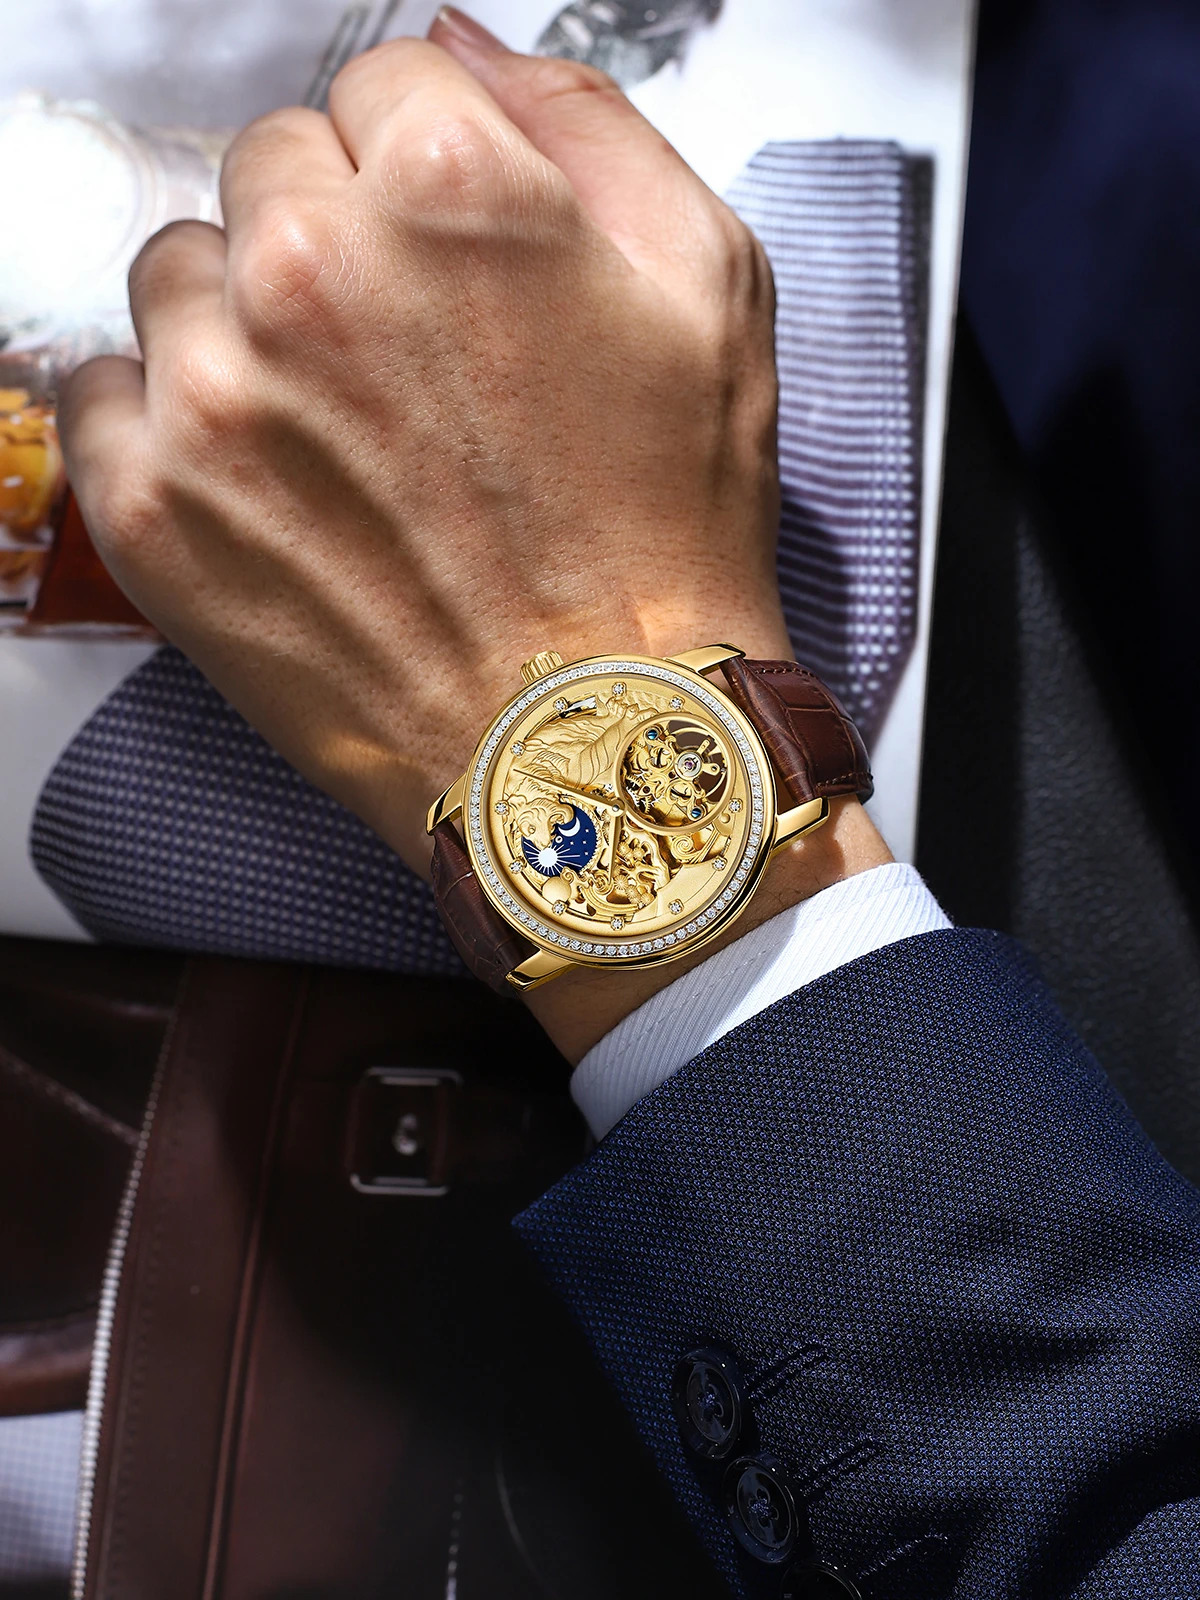 APNUONR Golden Tiger Watch Fashion Classic Diamond Men's Watch Mechanical Automatic Winding 2022 New Luxury Watch enlarge